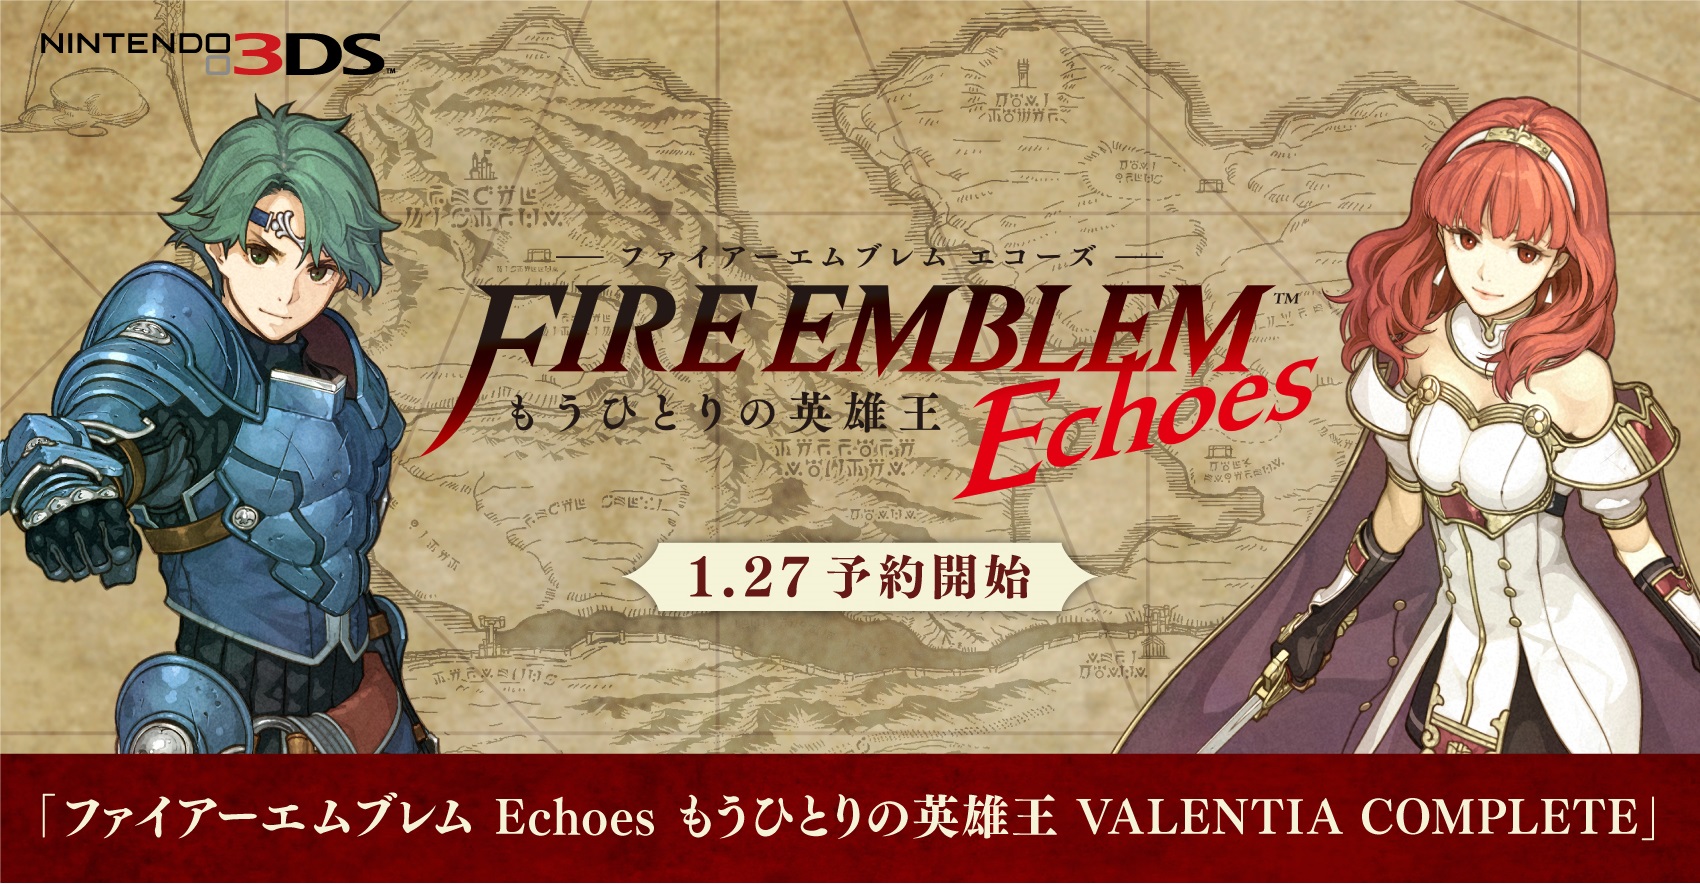 Nintendo fire emblem. Fire Emblem Echoes: Shadows of Valentia. Fire Emblem Echoes: тени Валентии. Fire Emblem Echoes. Fire Emblem 3ds.